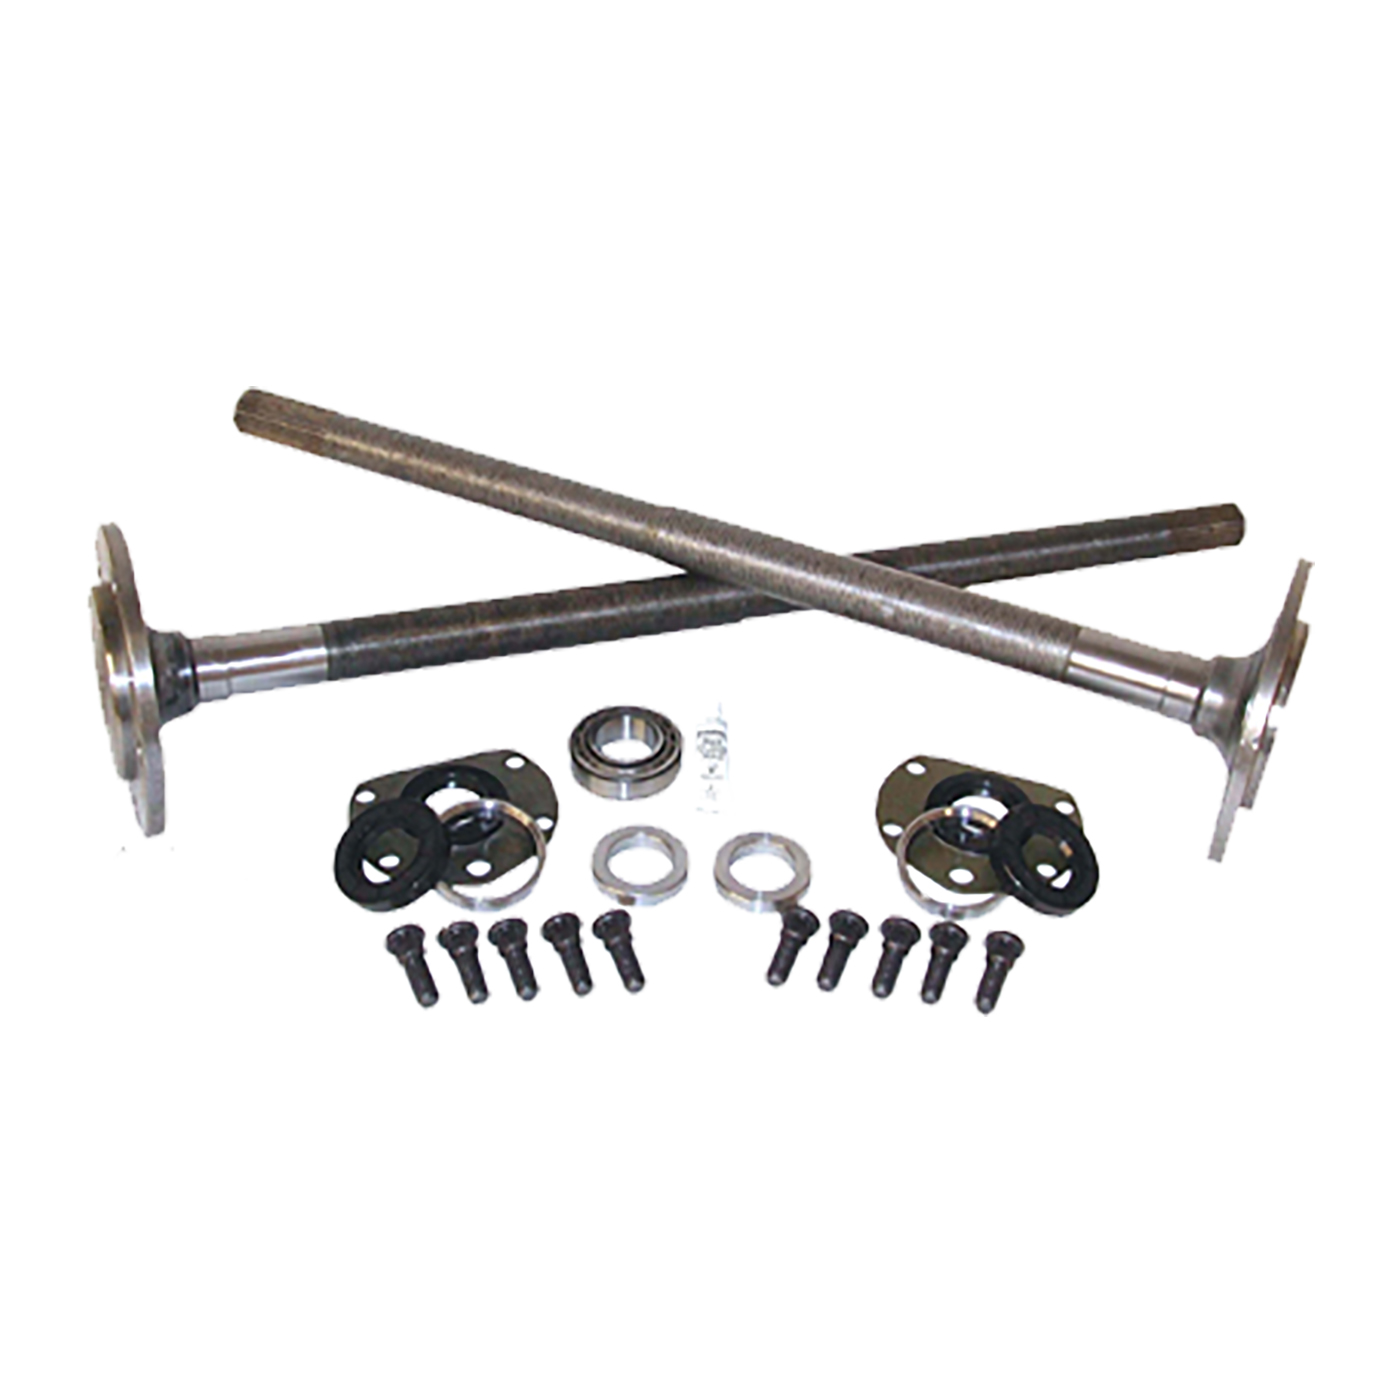 One piece axle kit, Model 20, '76-'79 CJ7 Quadratrack w/bearings, 29 spline 